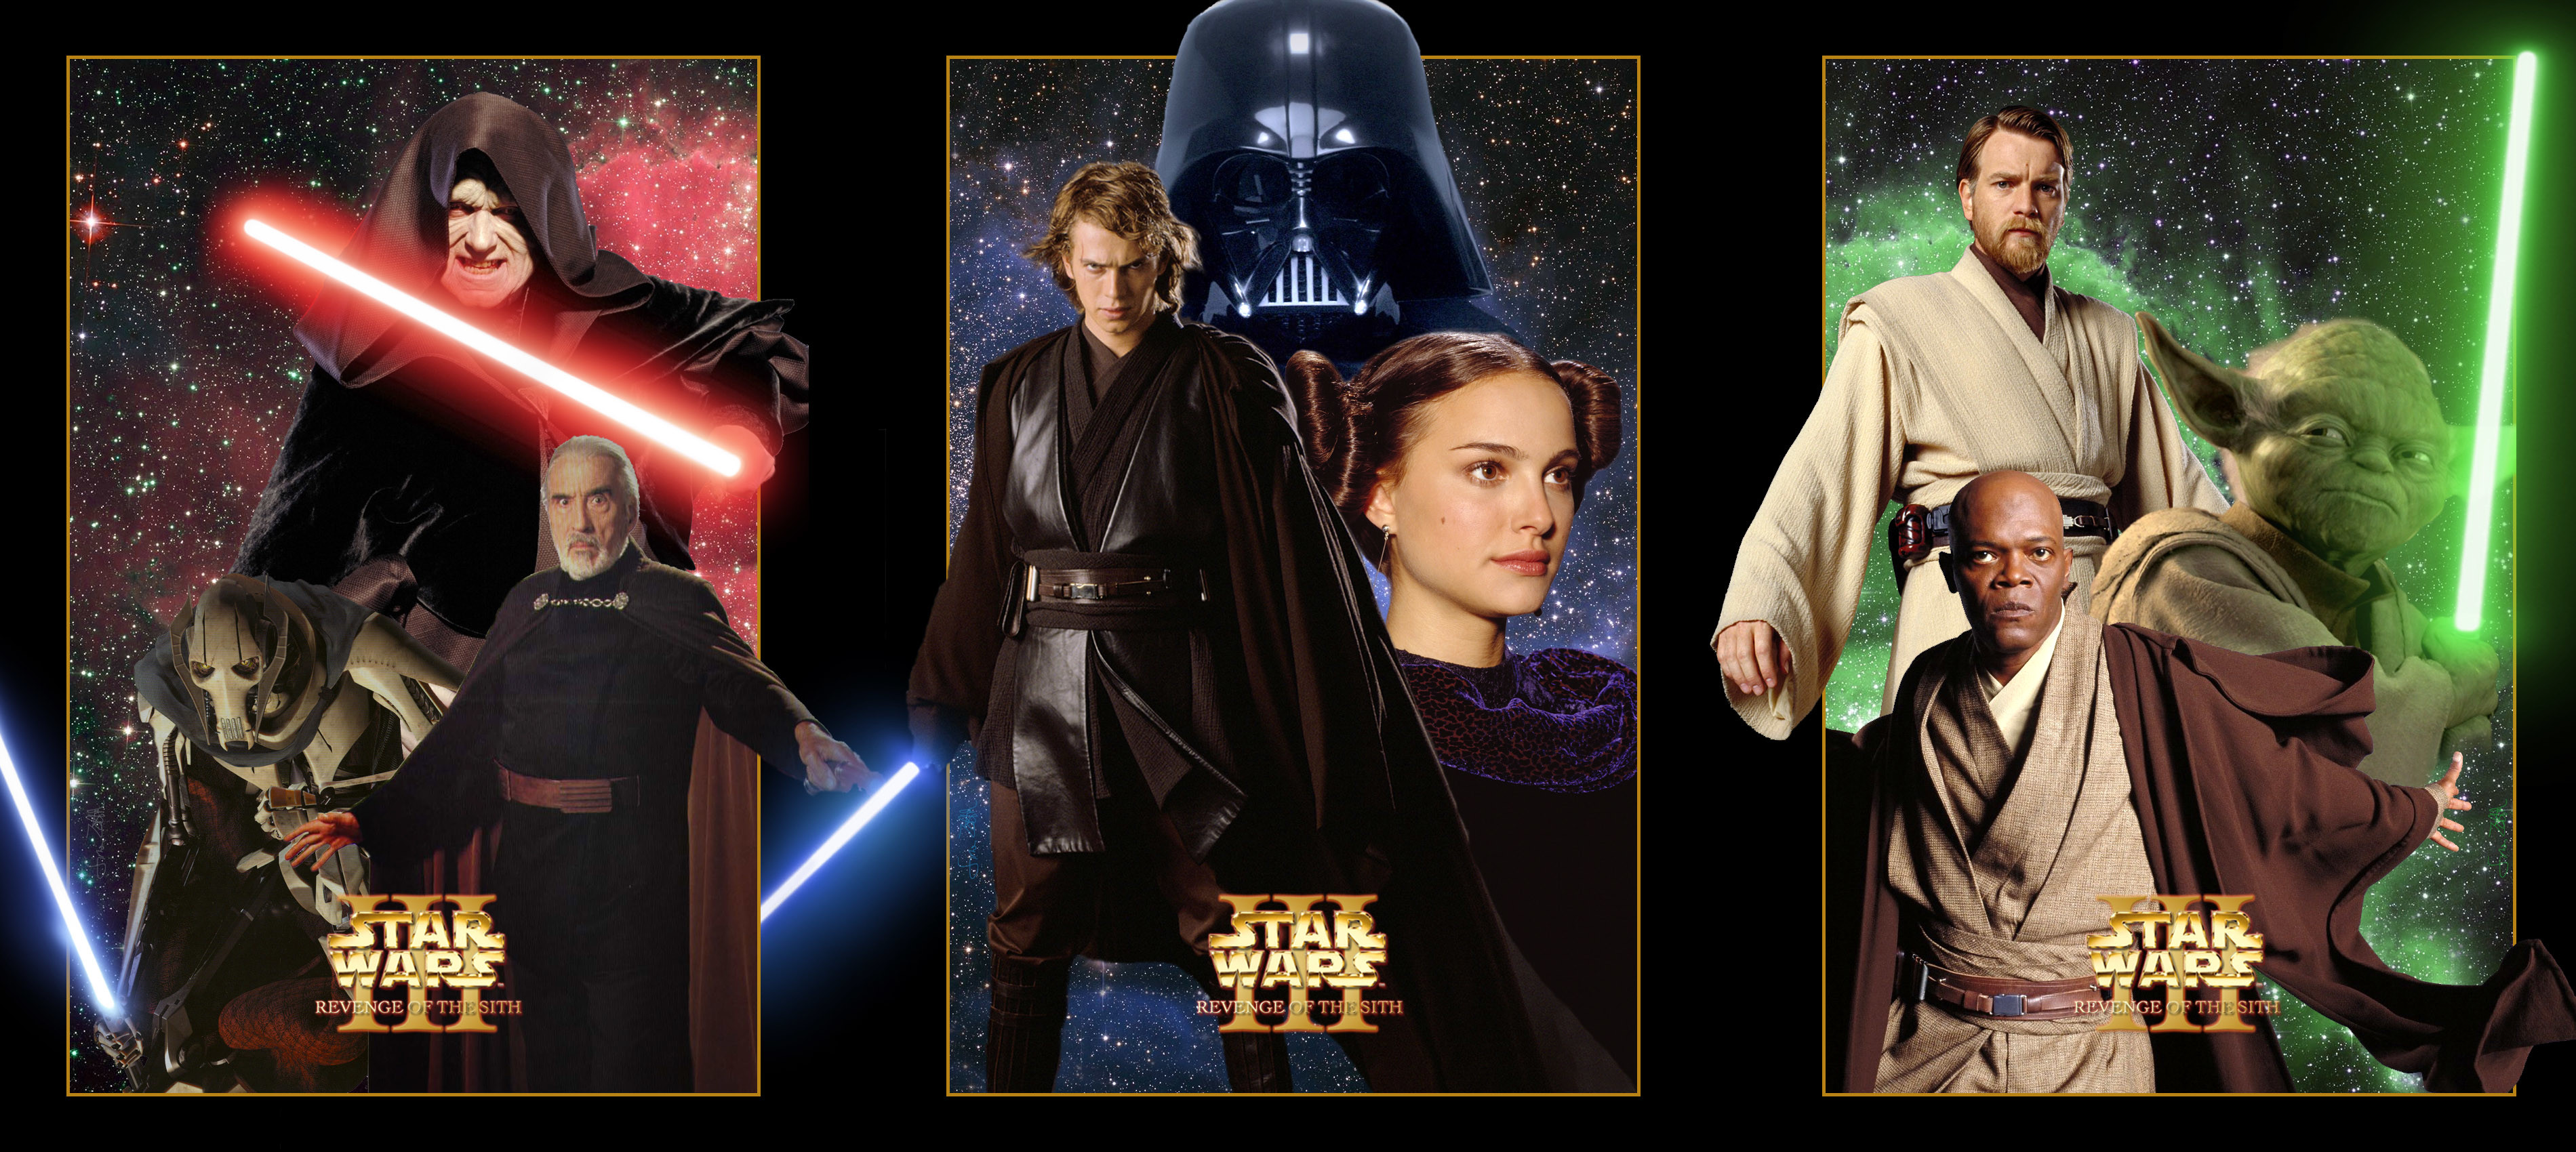 Anakin Skywalker HD Star Wars Episode III Revenge of the Sith Wallpapers   HD Wallpapers  ID 103596